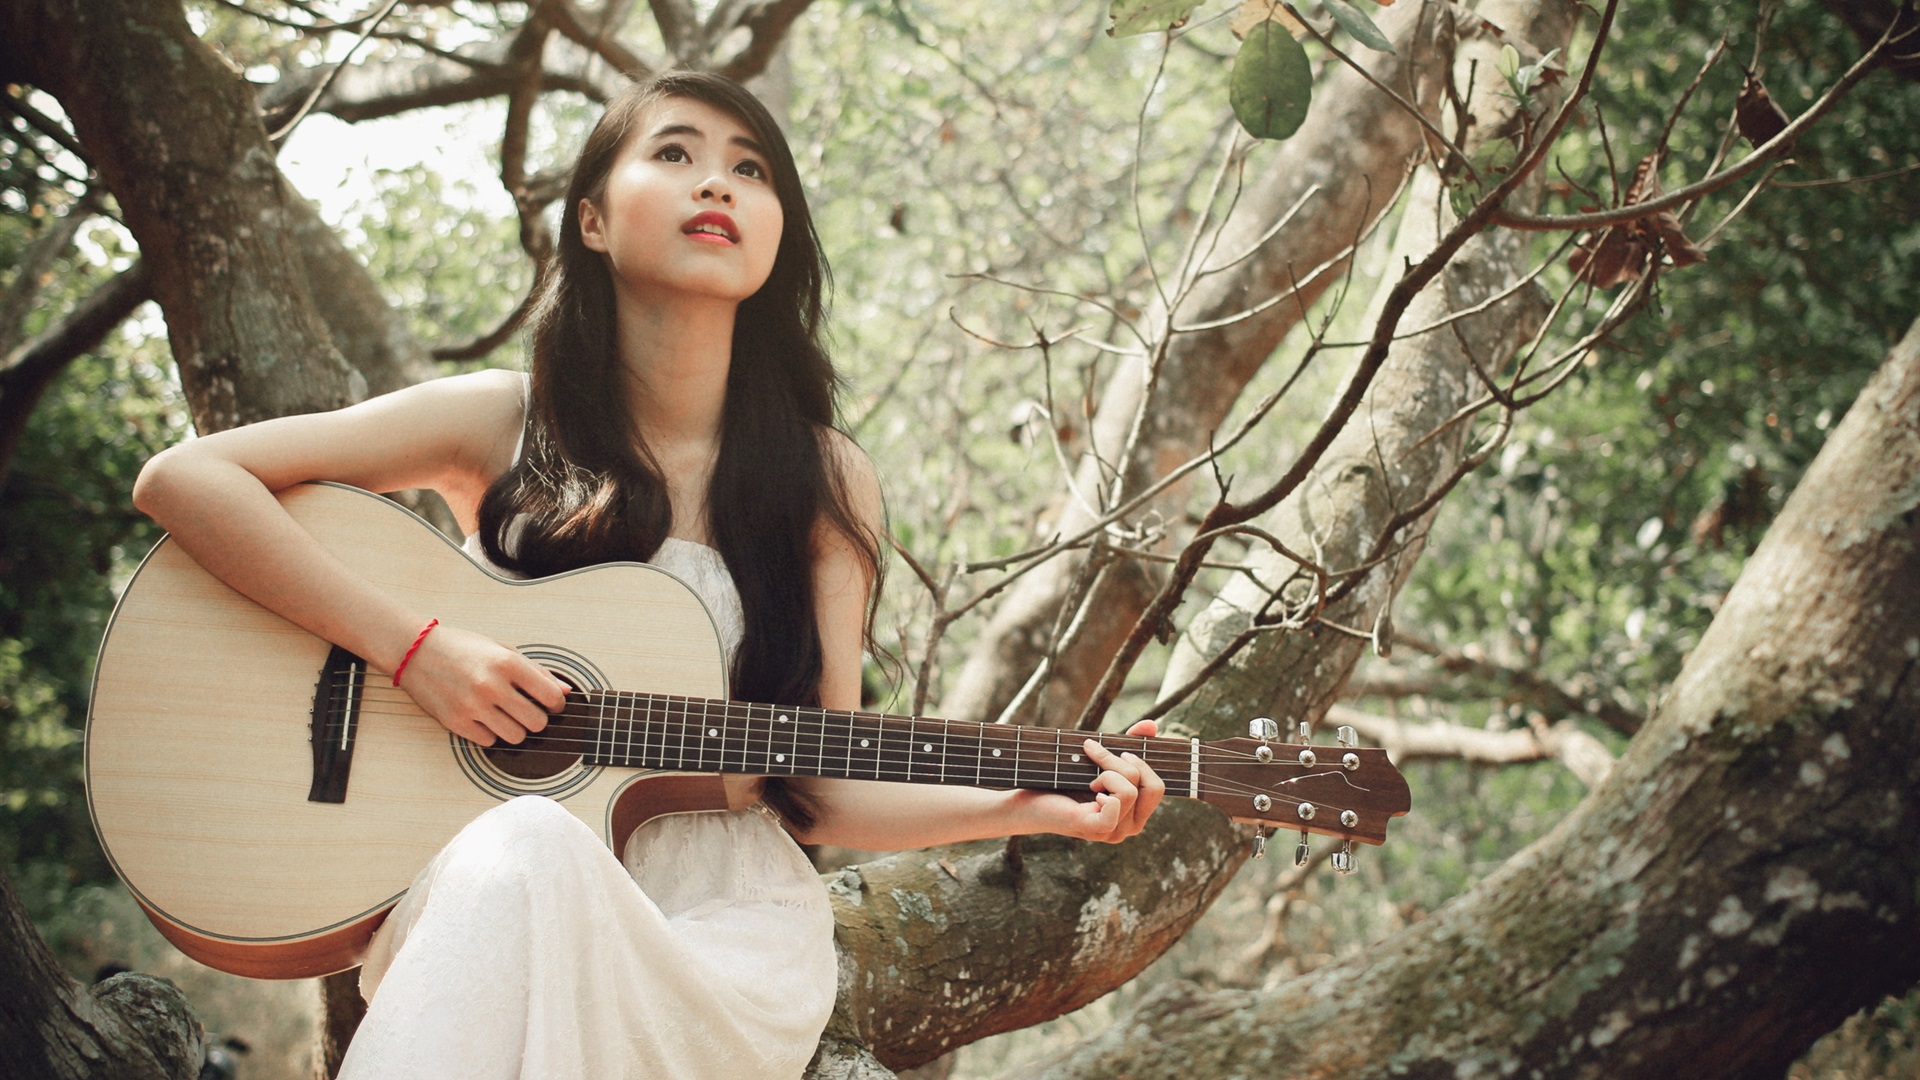 guitar girl wallpaper,guitar,string instrument,plucked string instruments,musical instrument,musician